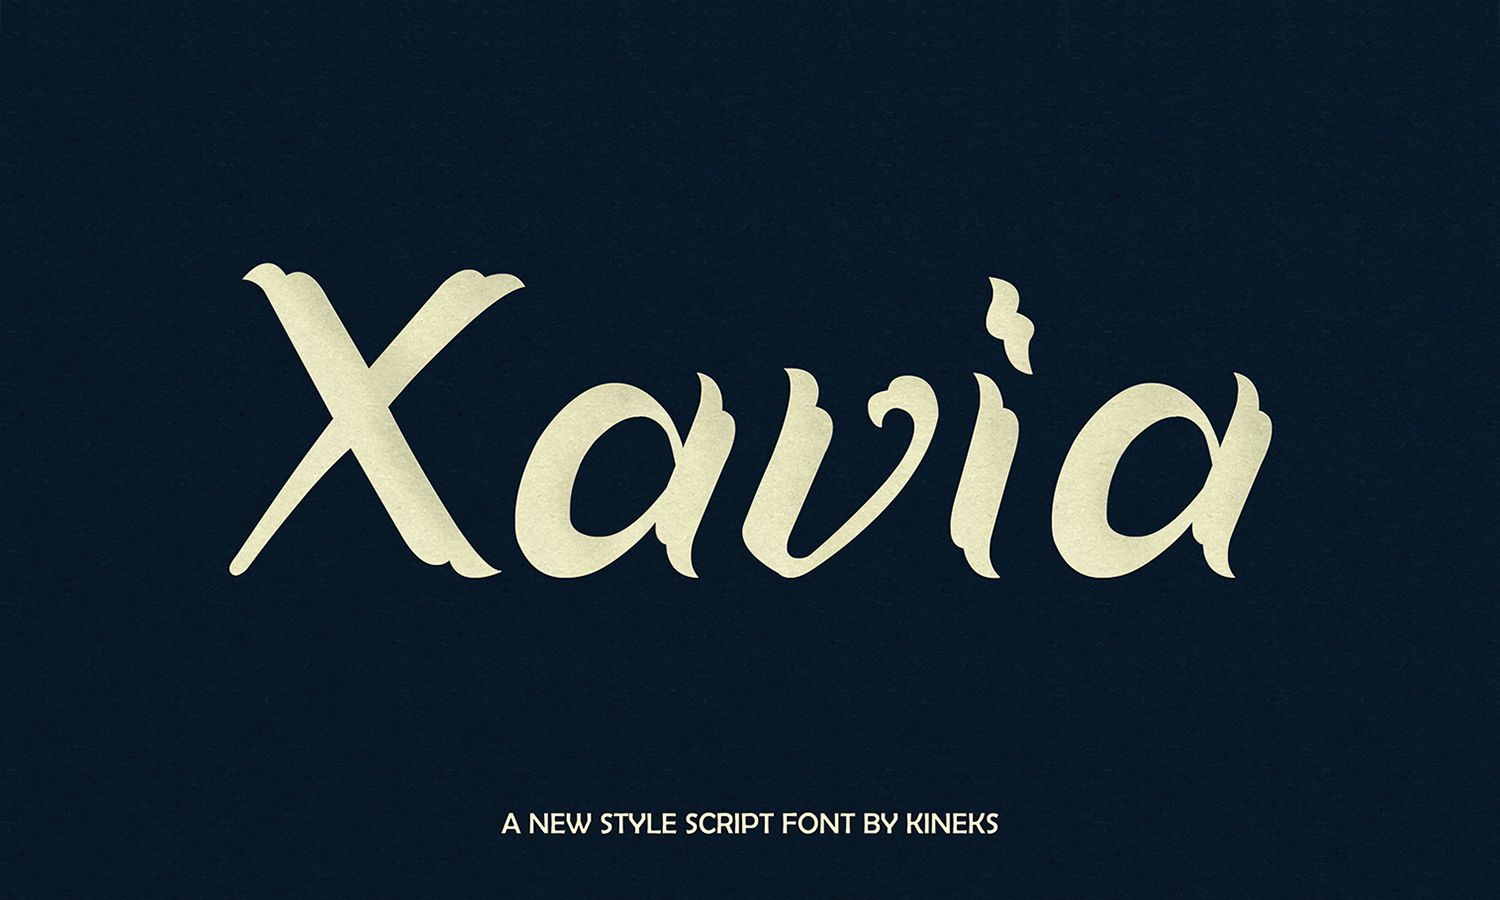 Xavia Free Font